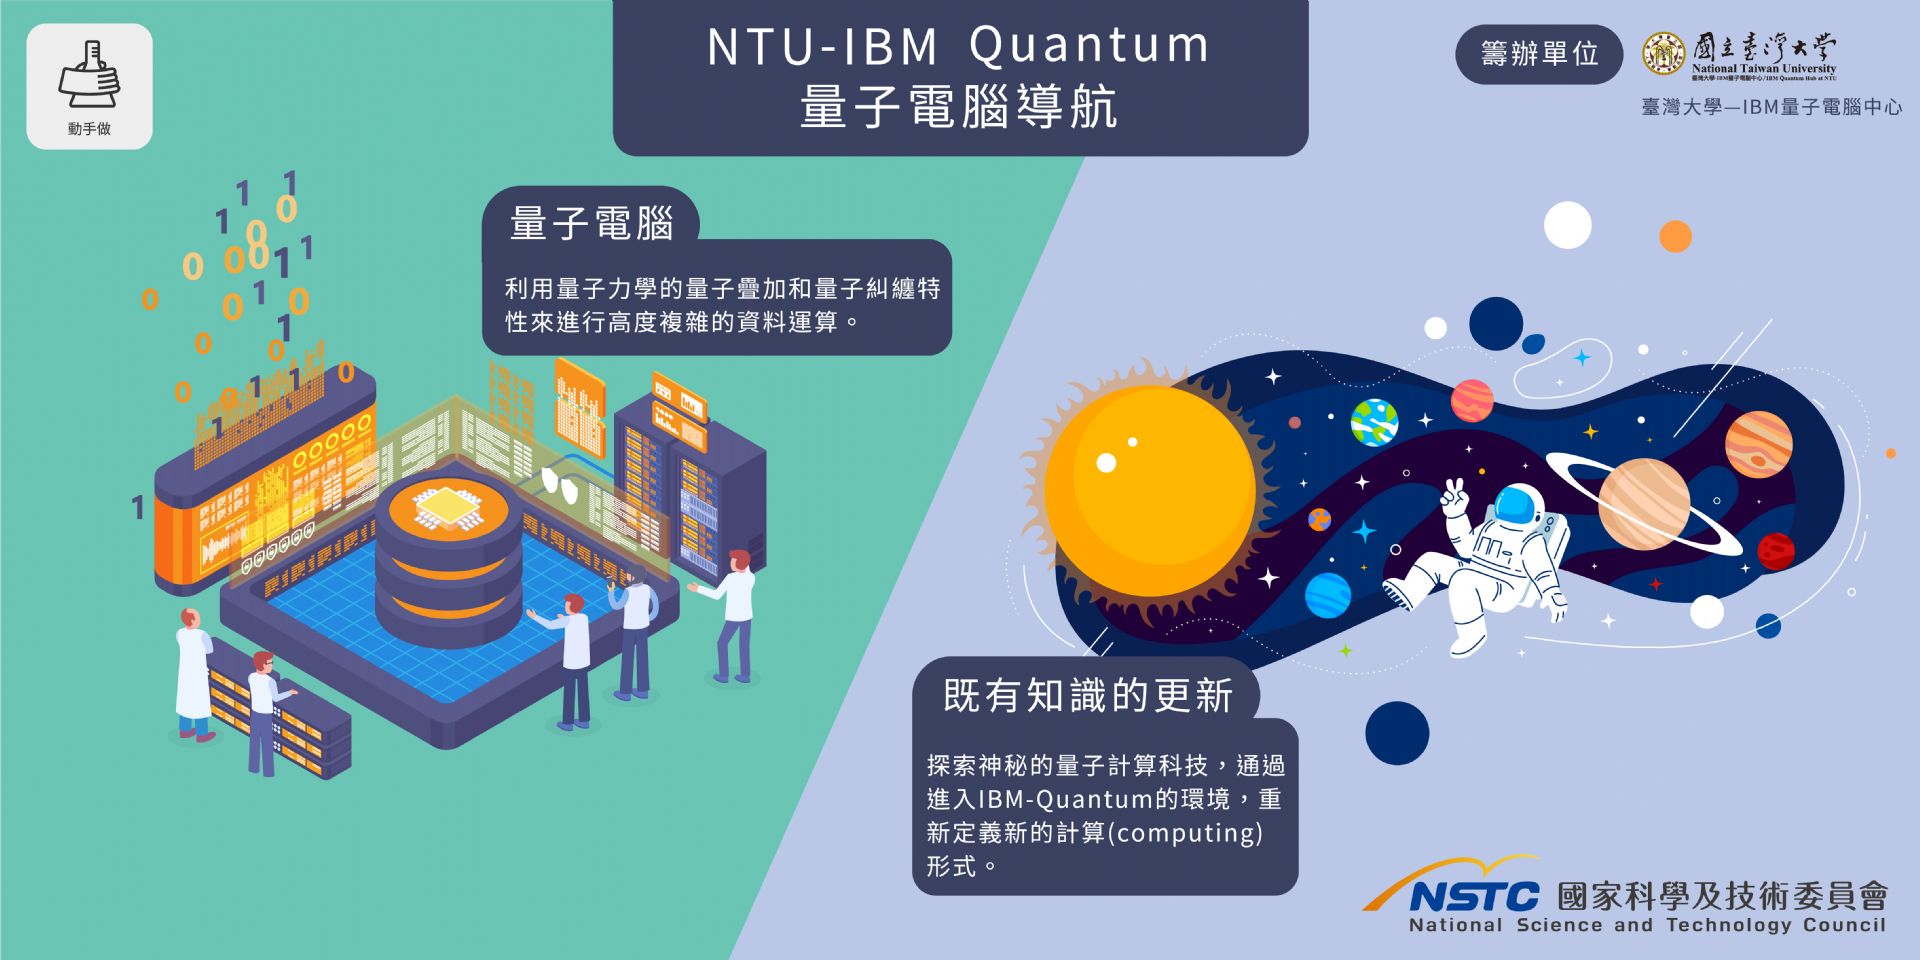  NTU-IBM Quantum 
量子電腦導航